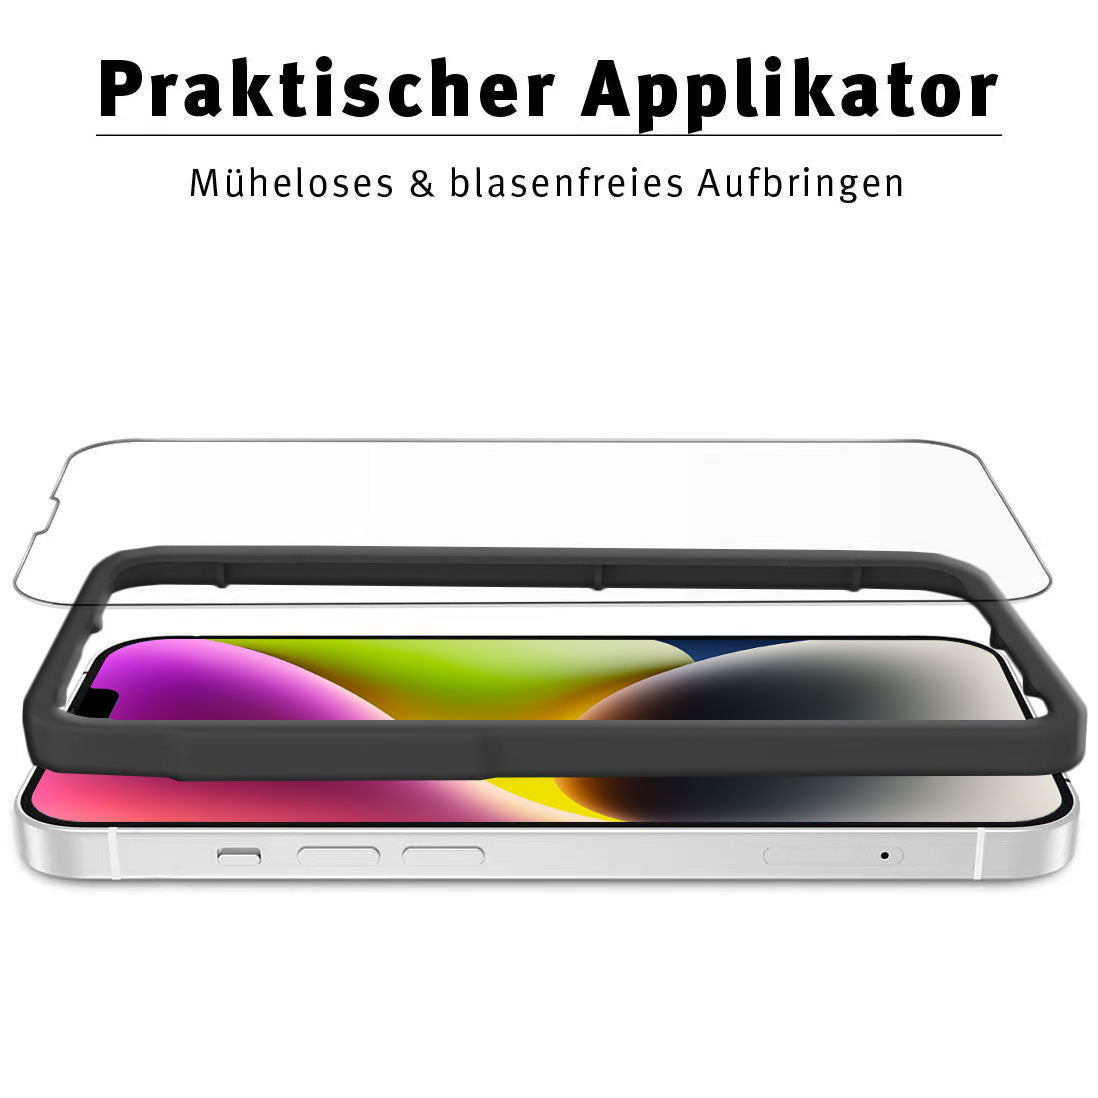 ArktisPRO iPhone 14 Plus Displayschutz GLAS